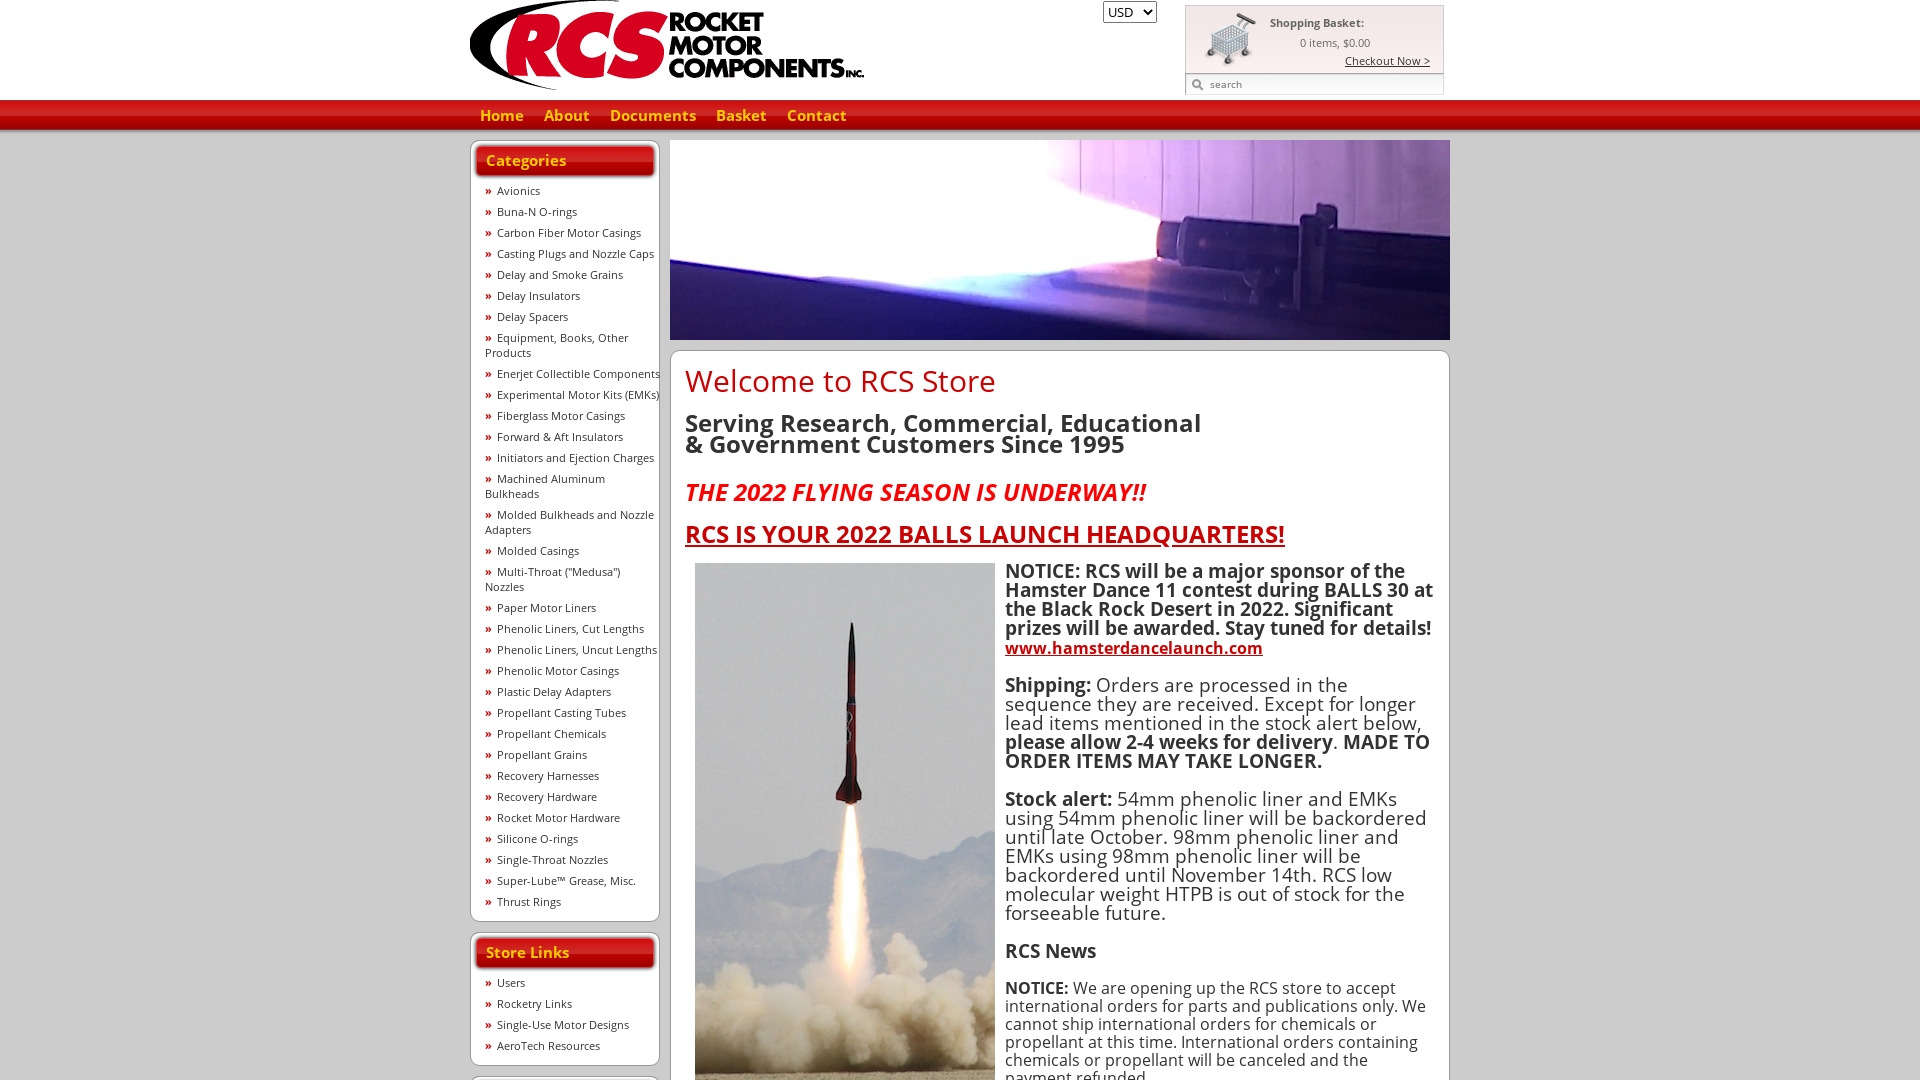 www.rocketmotorparts.com